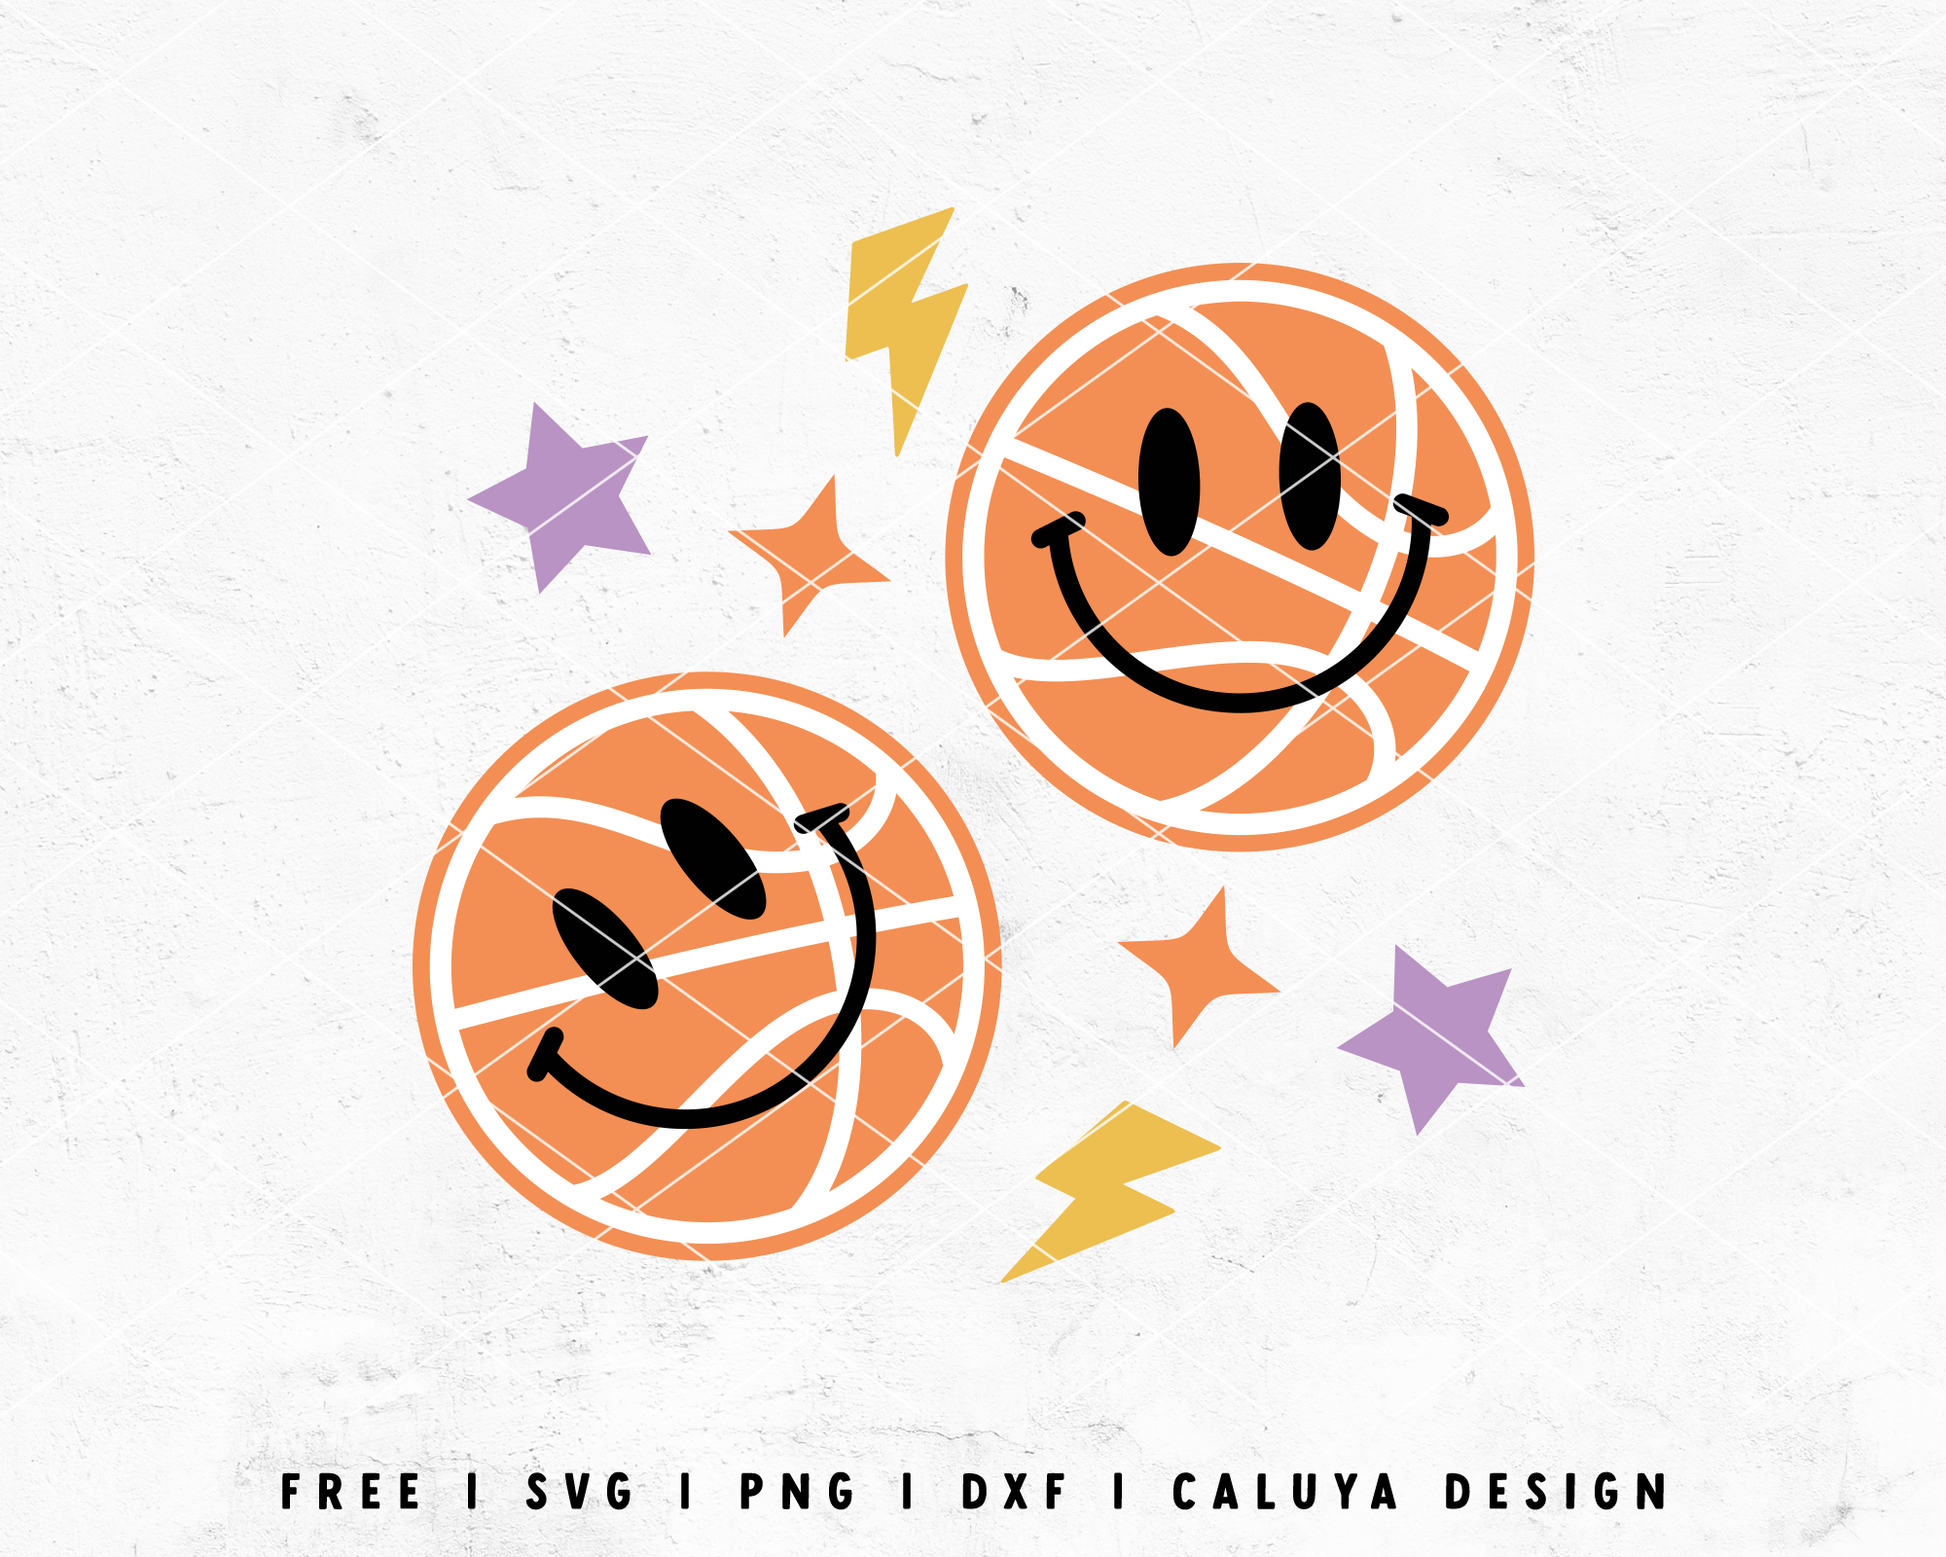 FREE Basketball SVG | Cute Basketball SVG Cut File for Cricut, Cameo Silhouette | Free SVG Cut File